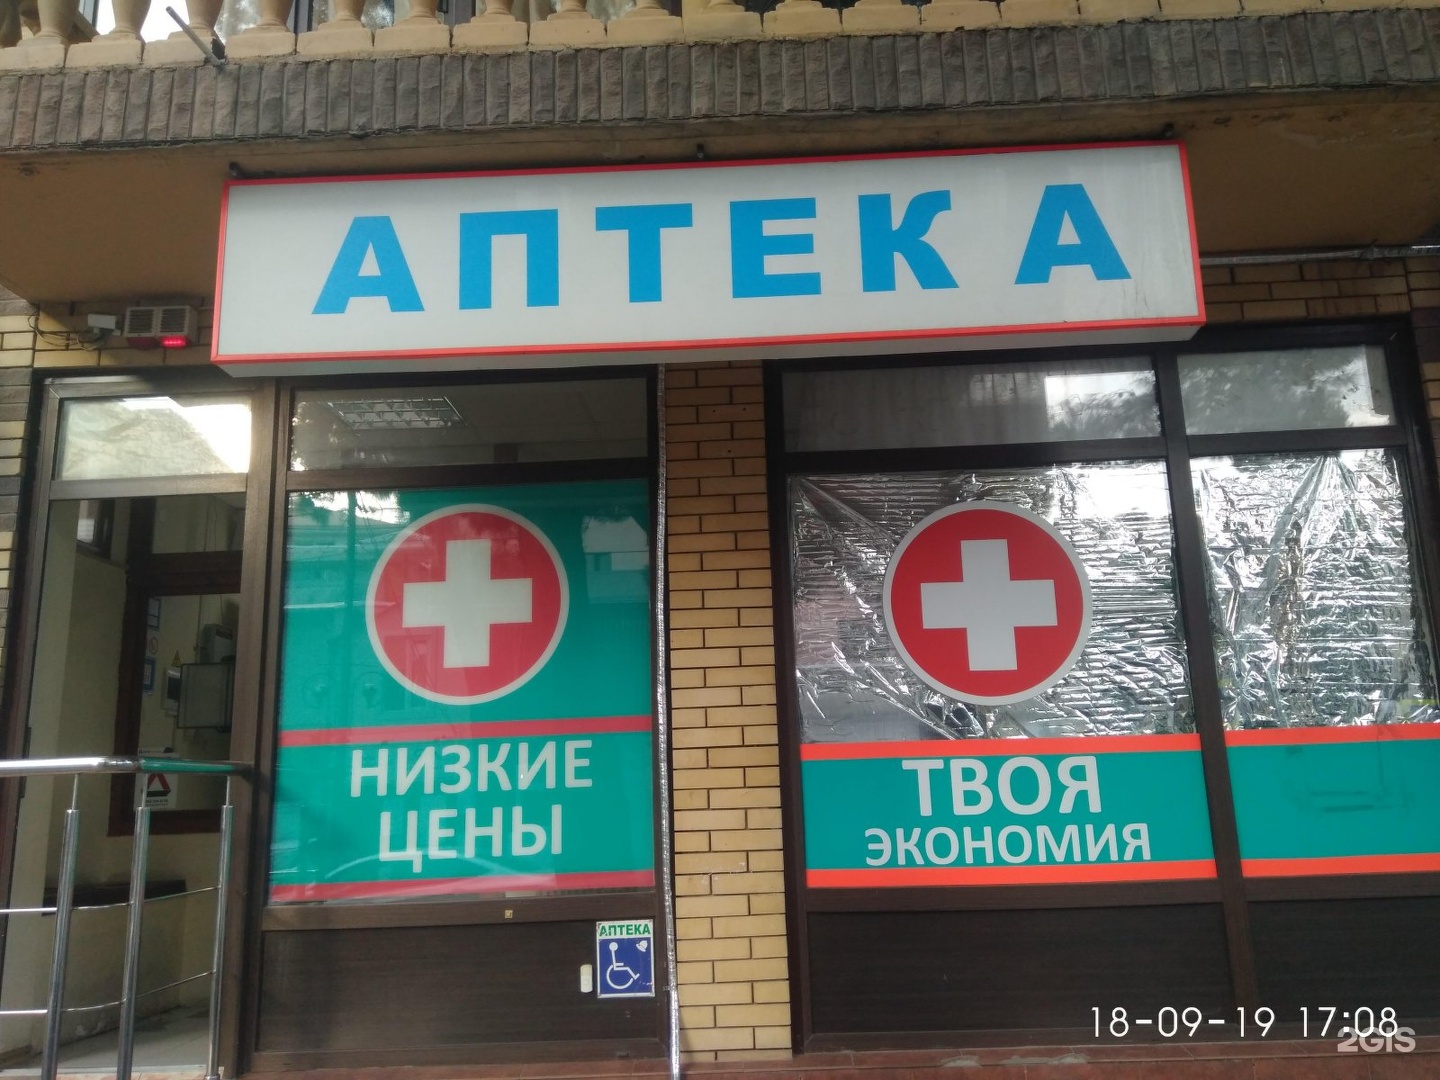 Аптека твоя экономия. Круглосуточная аптека Анапа. Анапа социальная аптека на Крымской. Аптека твоя экономия фото. Аптека анапа телефоны